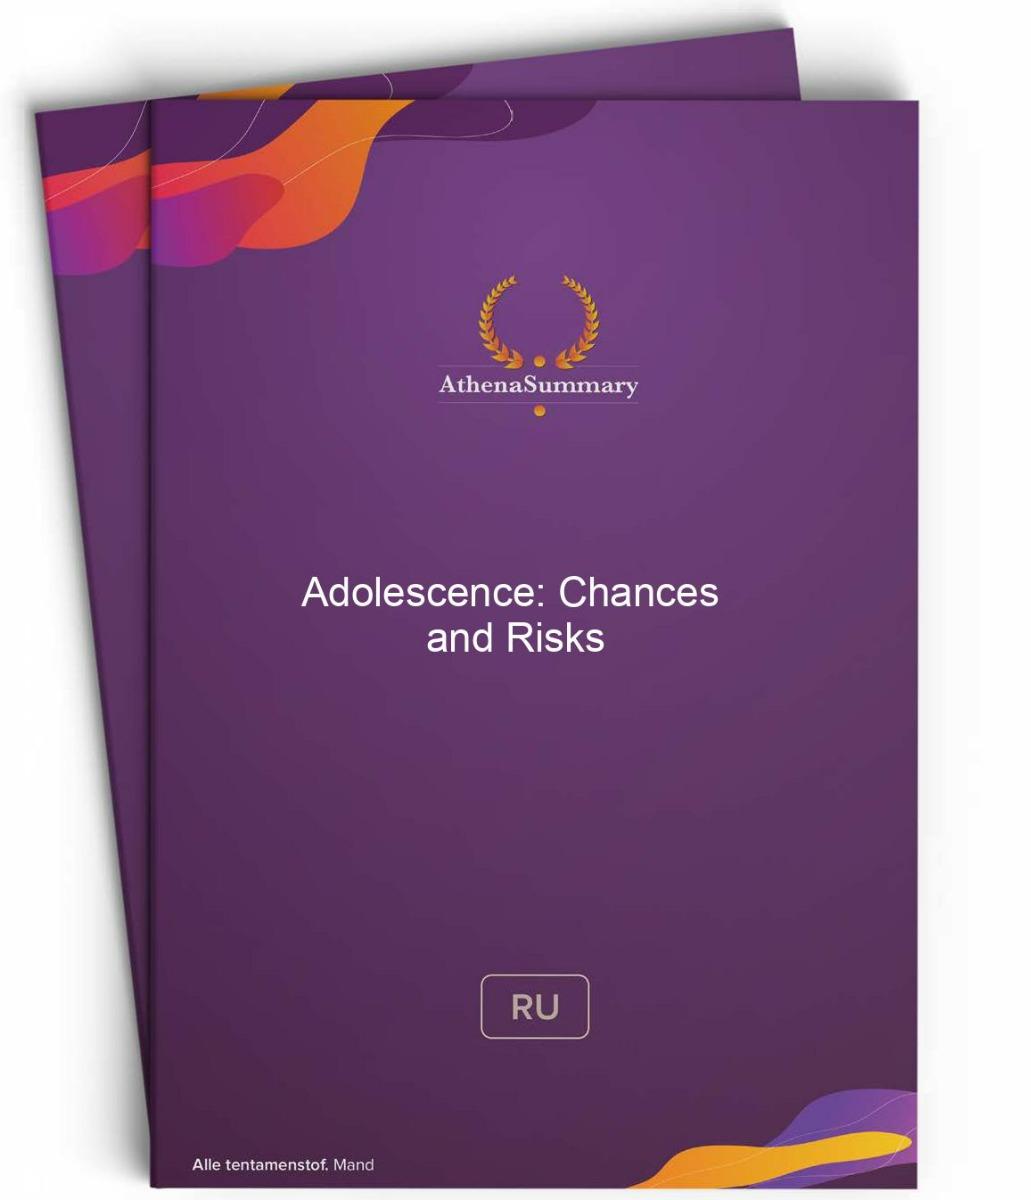 Adolescence: Chances and Risks - Literature summary